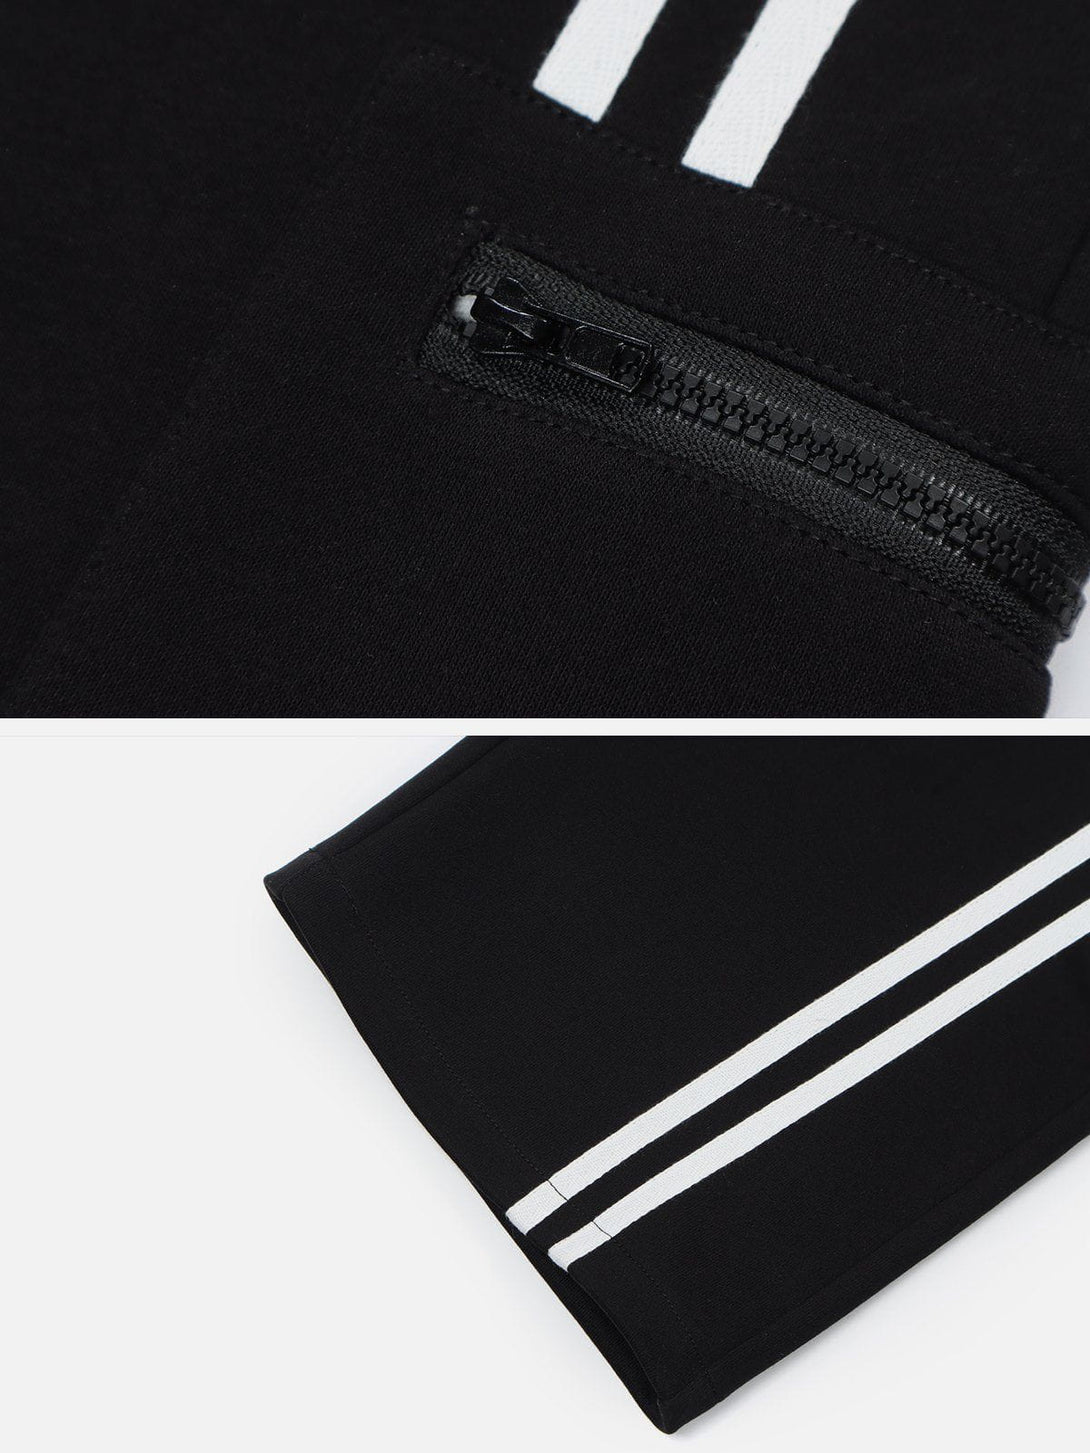 Majesda® - Striped Side Pockets Sweatpants outfit ideas streetwear fashion